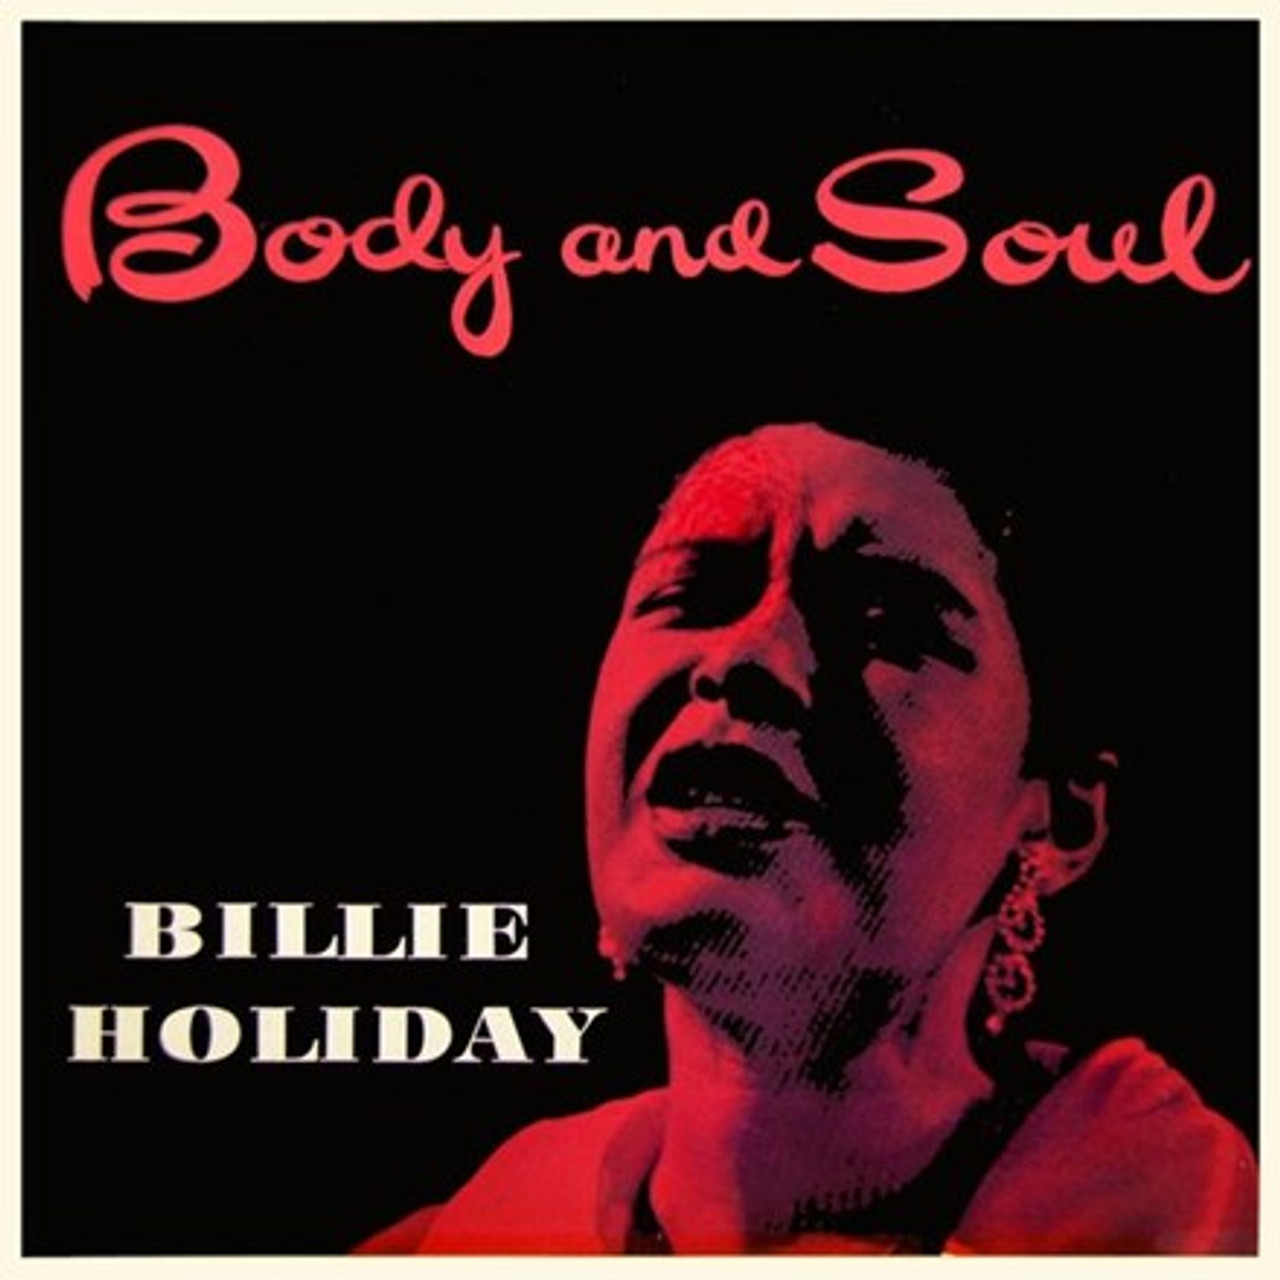 scaring spontan Jet Billie Holiday - Body and Soul (180g Vinyl LP) * * * - Music Direct